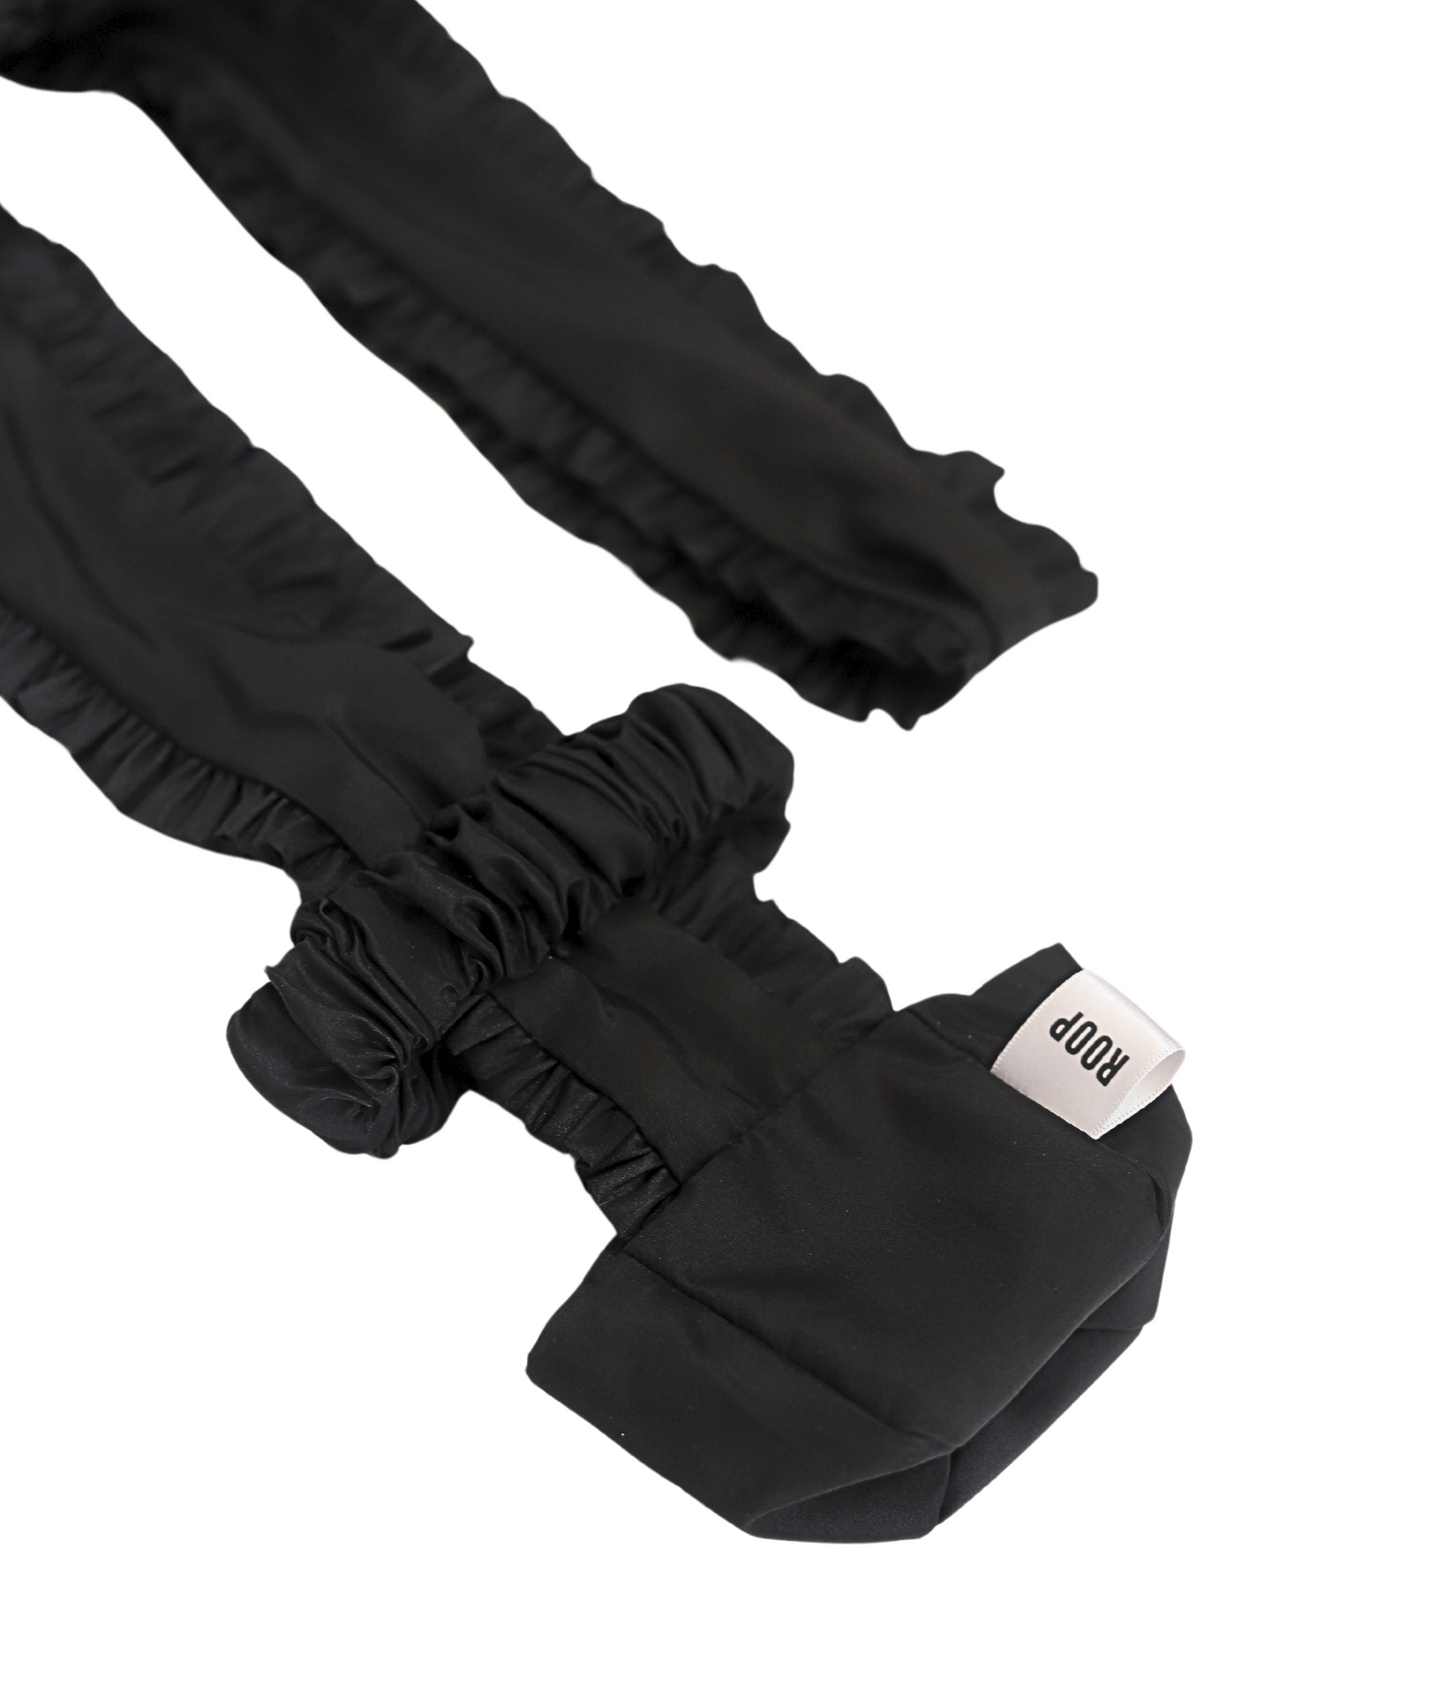 Crossbody bottle bag in black with ruffles